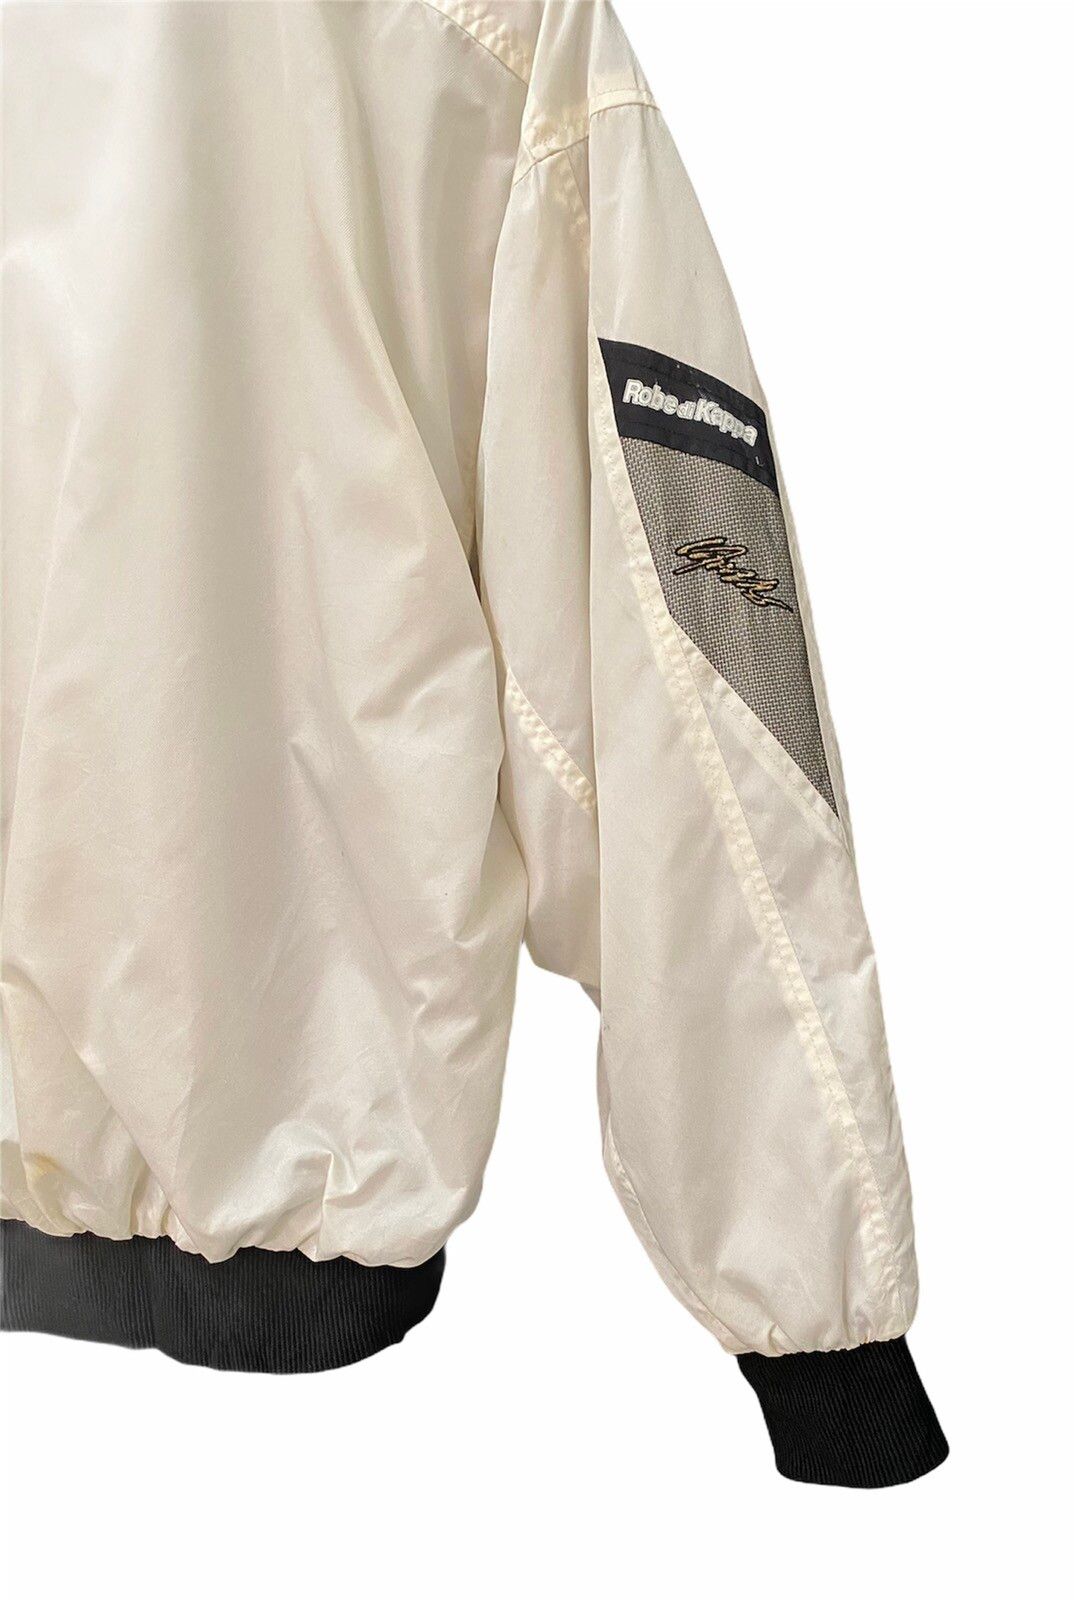 Kappa Logomatic Zipper Jacket/Trainer Jacket - 8